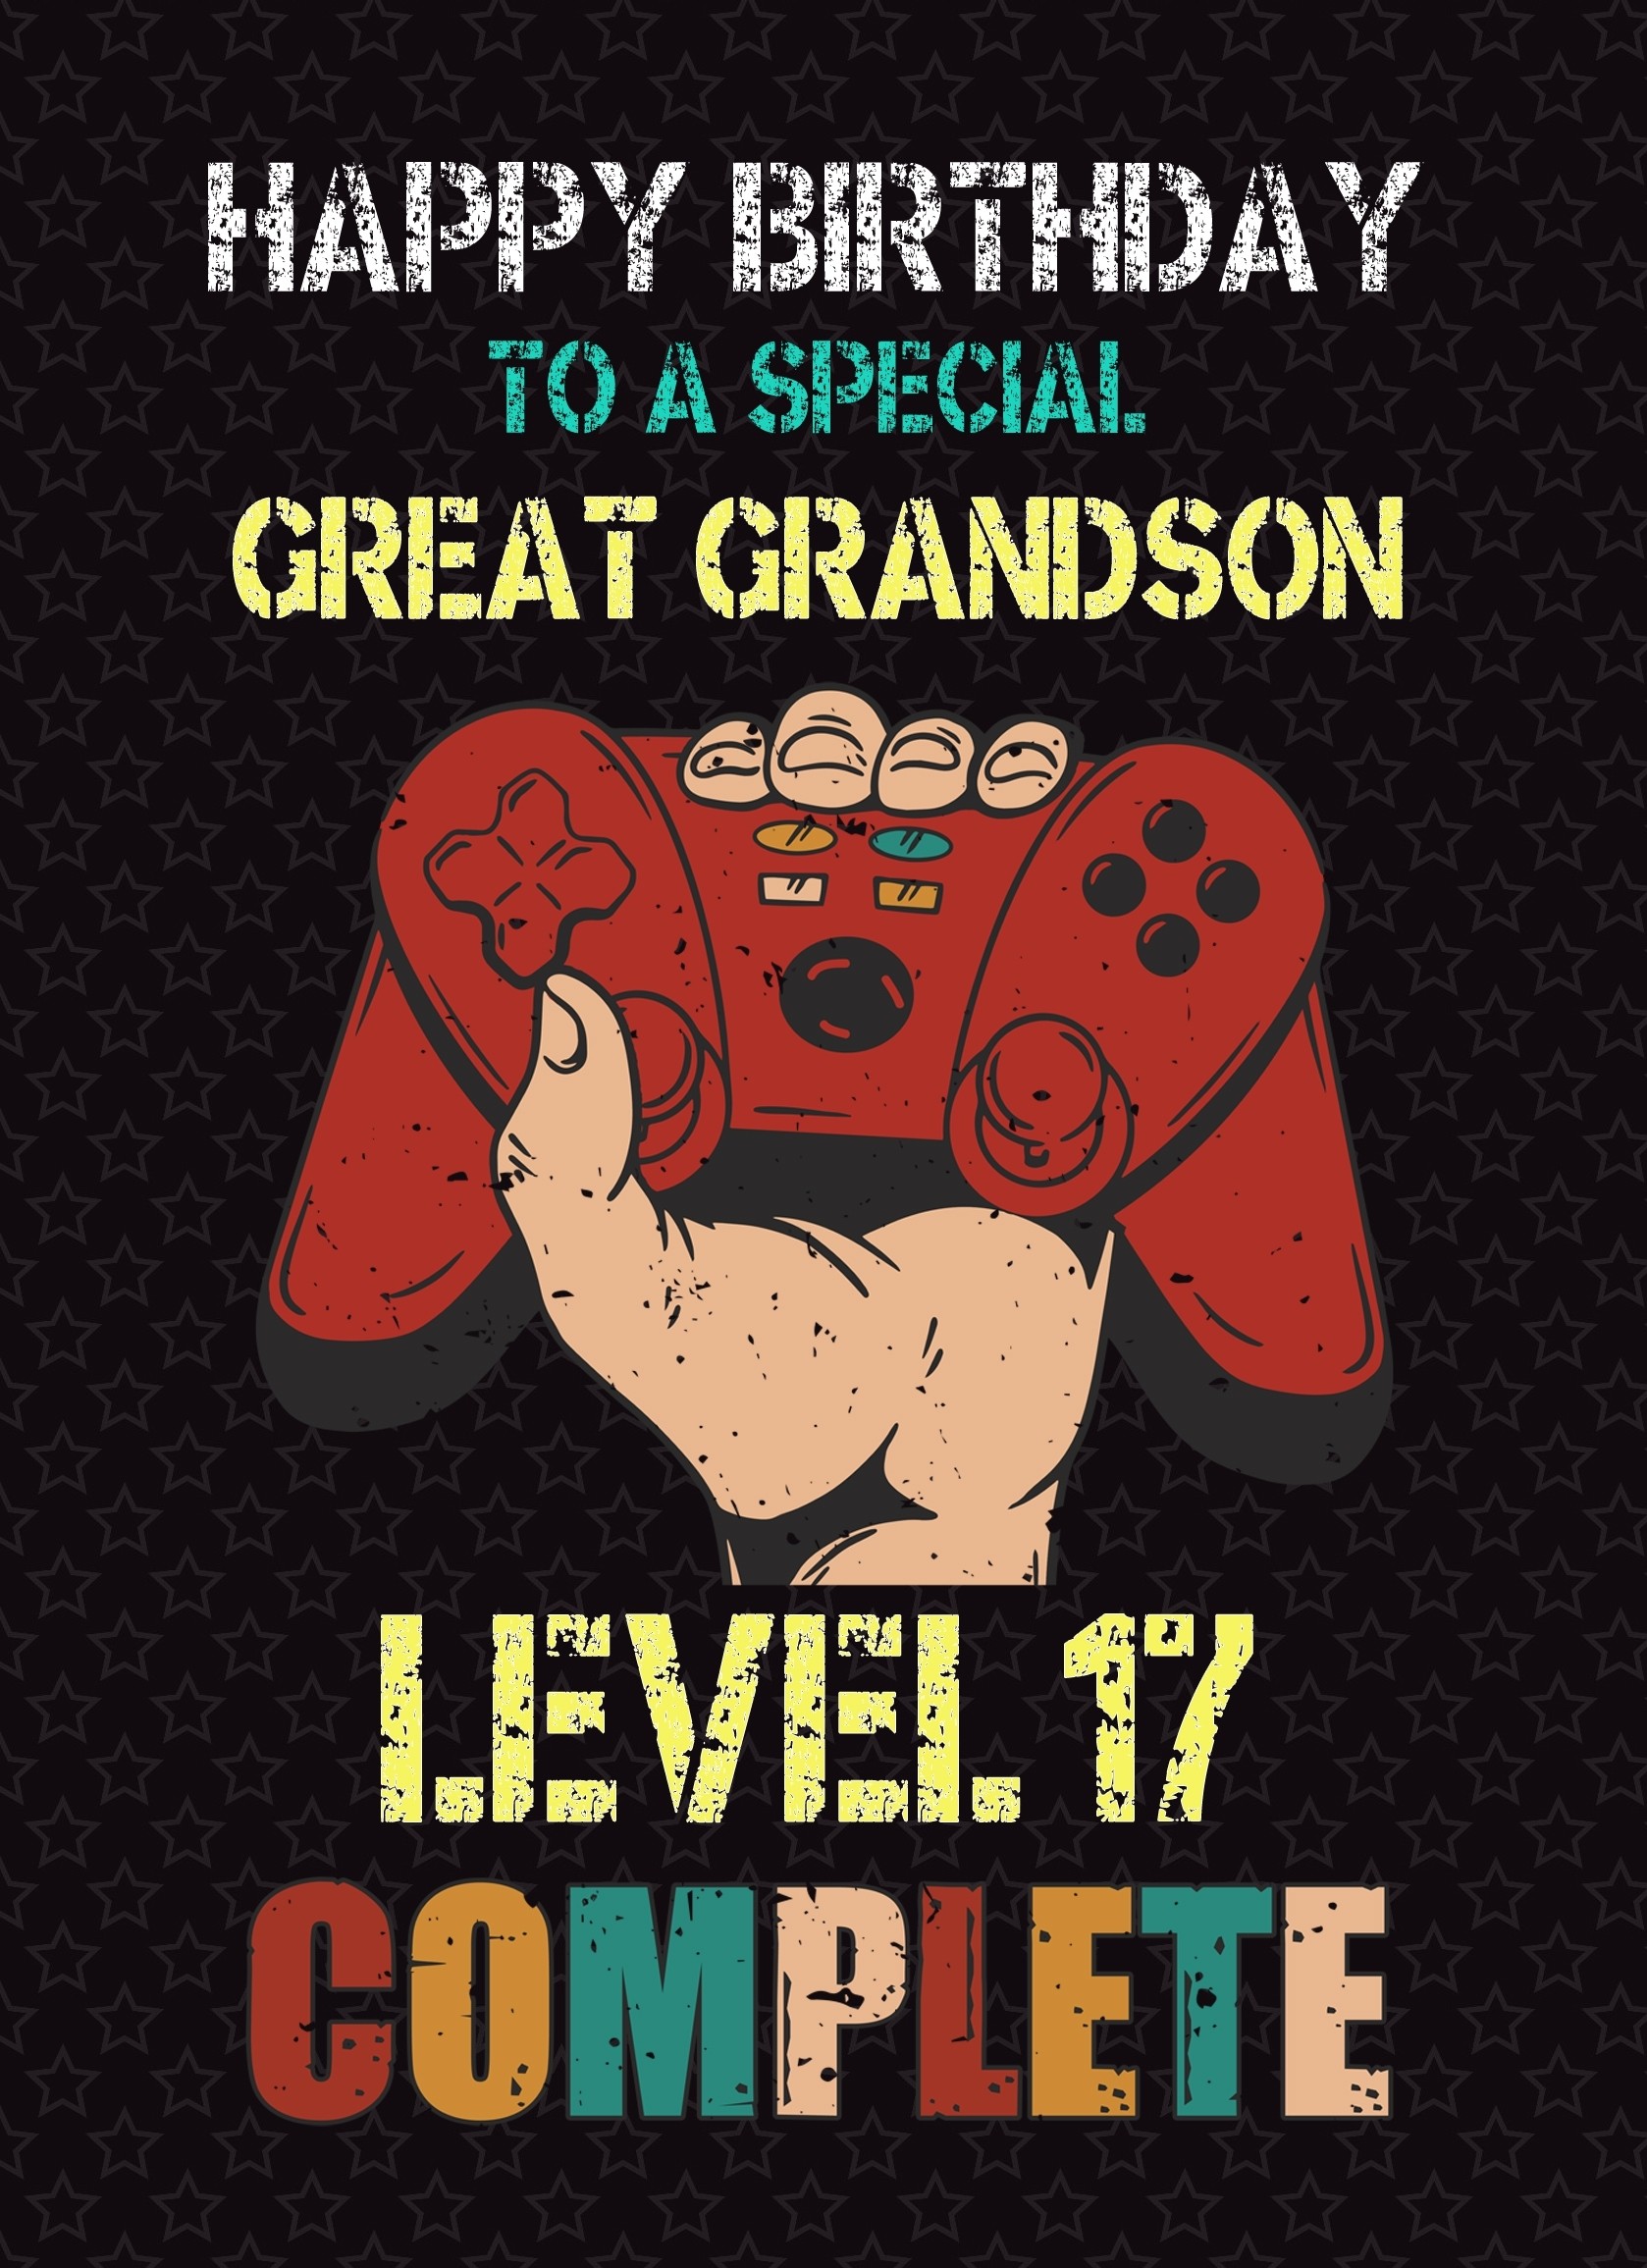 Great Grandson 18th Birthday Card (Gamer, Design 3)